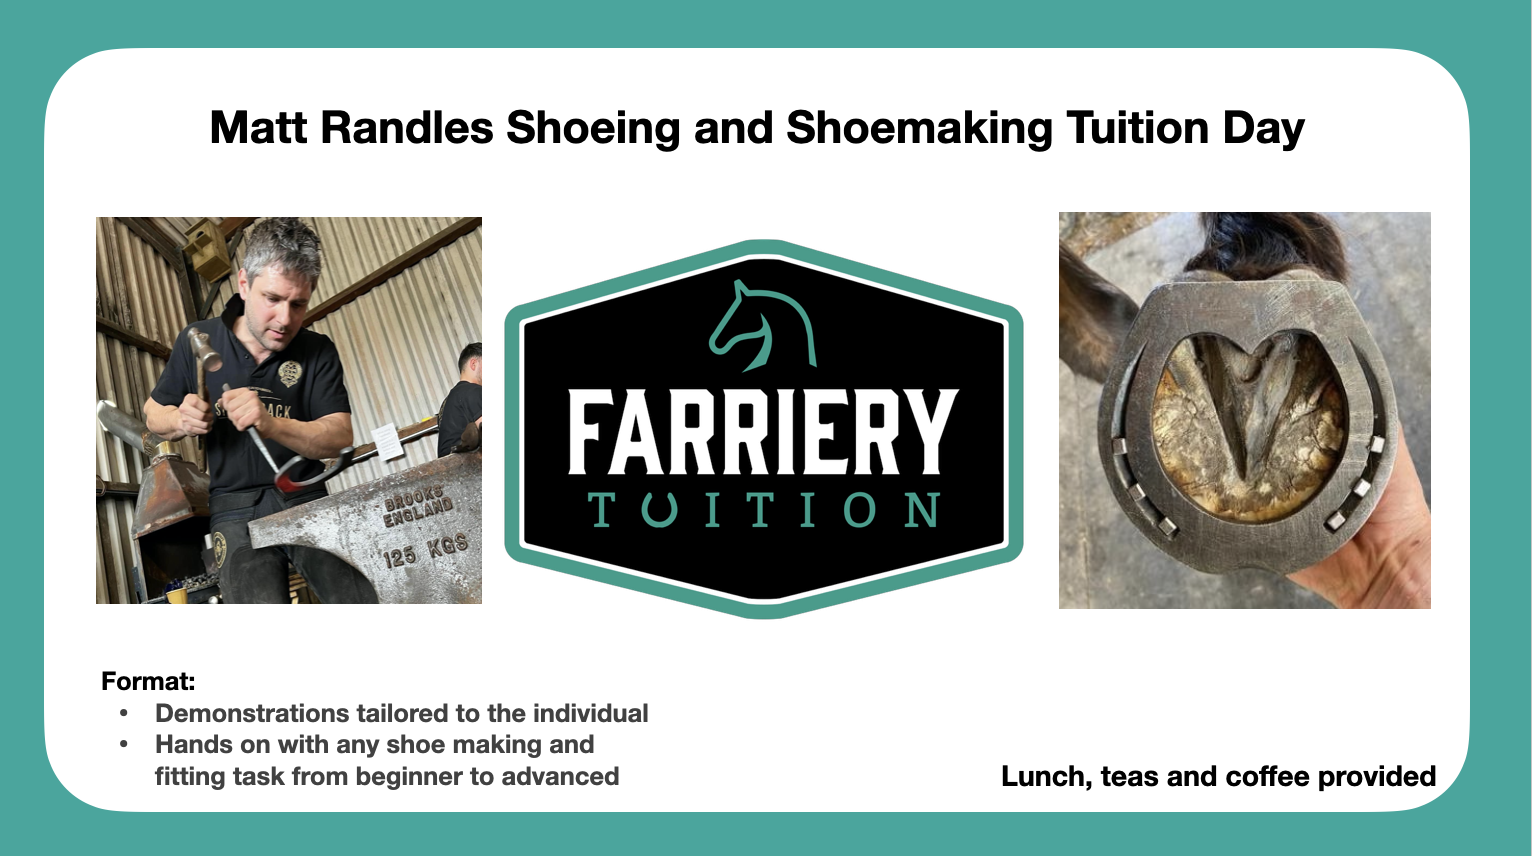 Matt Randles Shoemaking and Shoeing Tuition Day